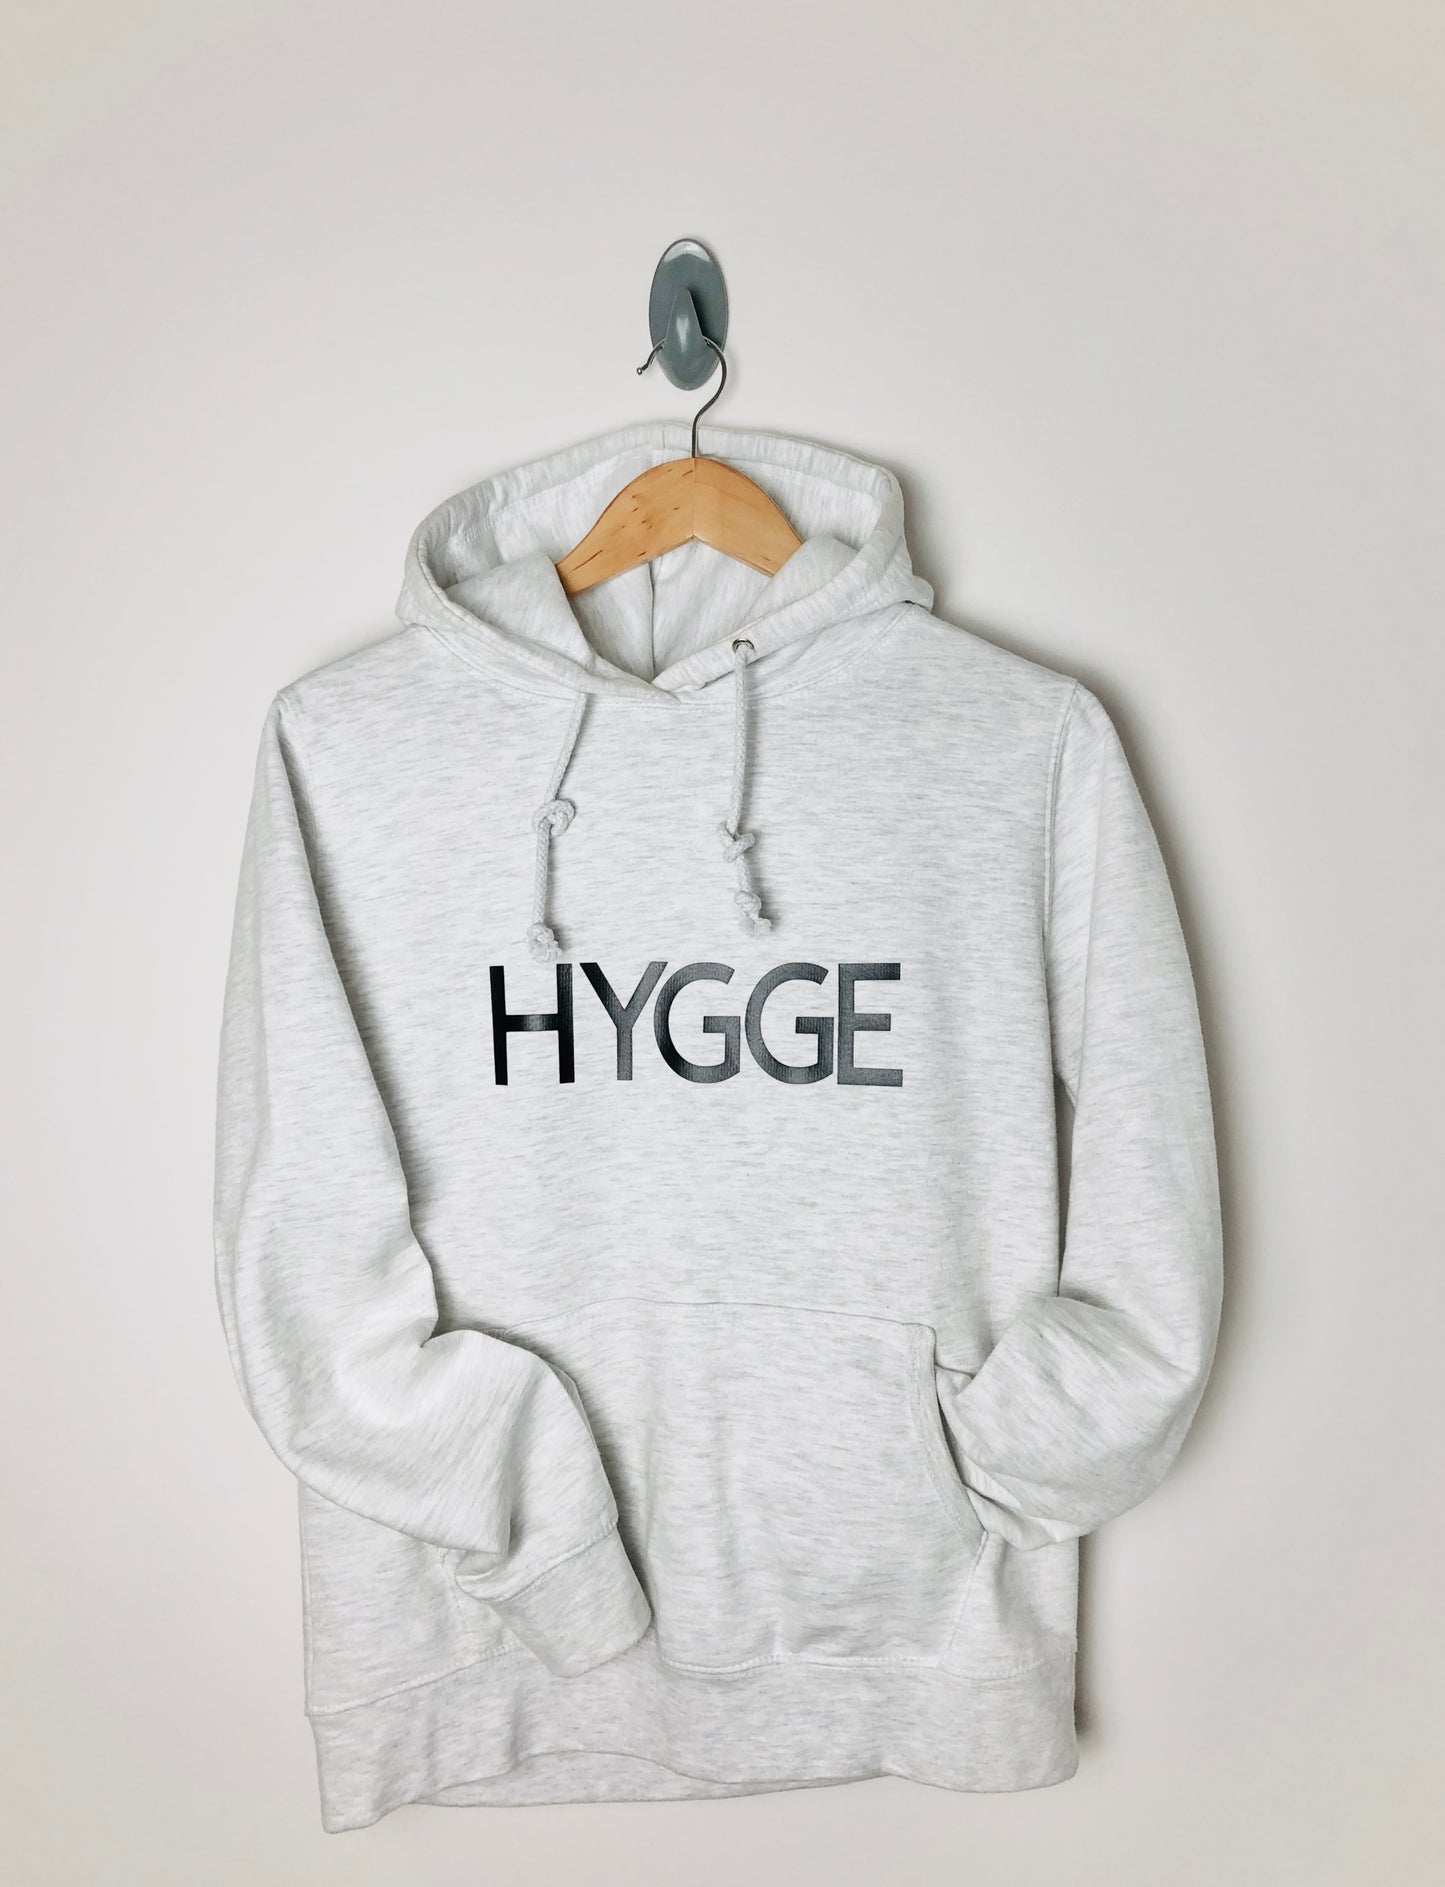 The Hygge Hoody